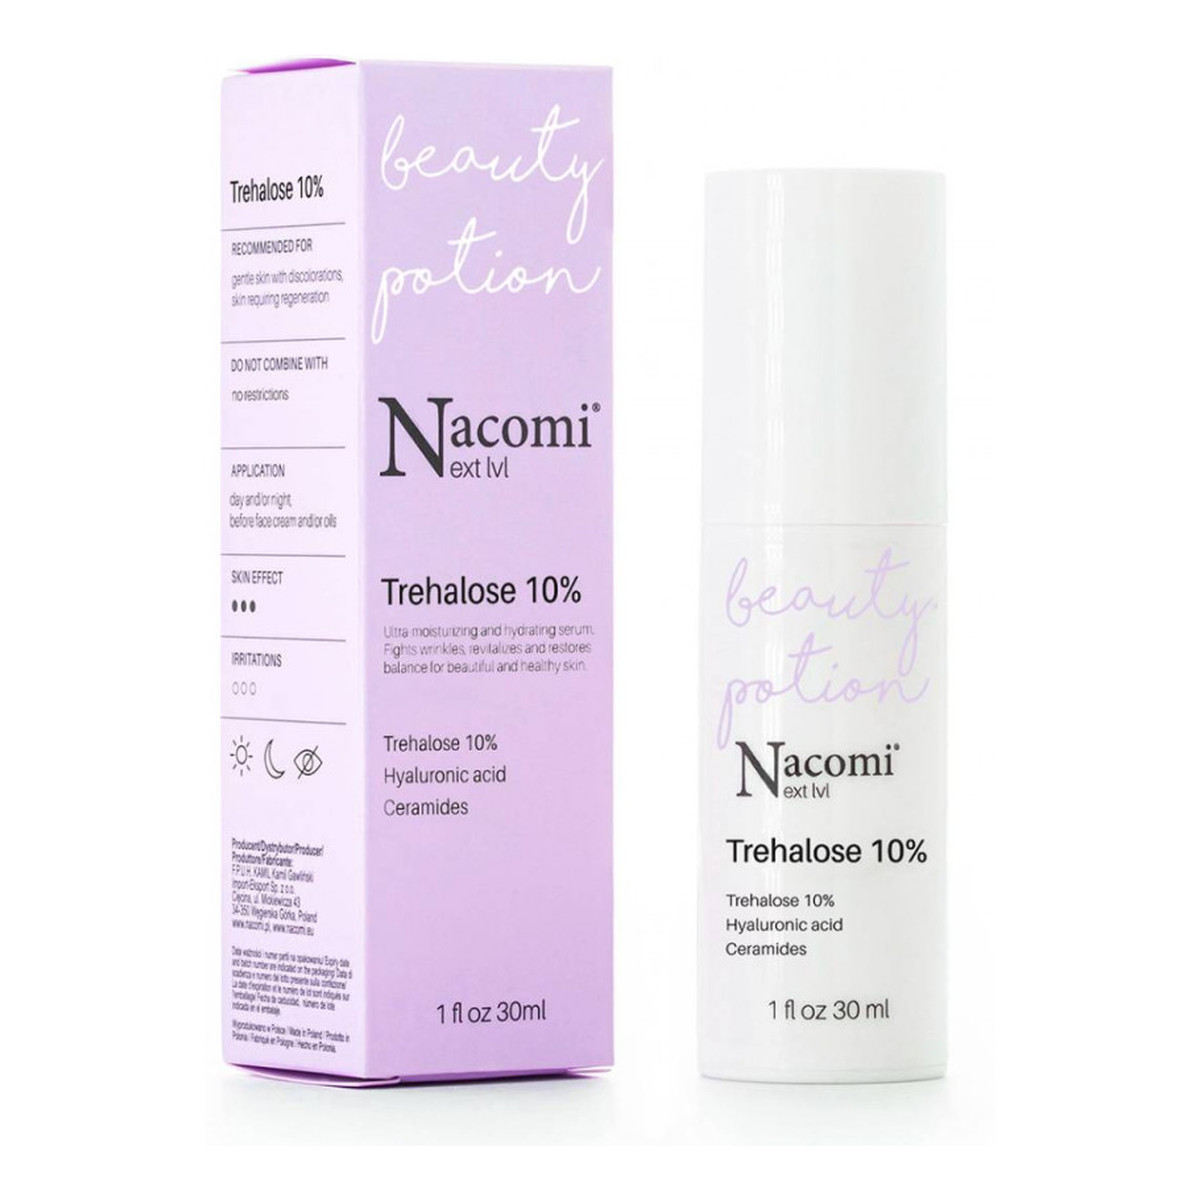 Nacomi Next Level Trehaloza 10% Serum 30ml